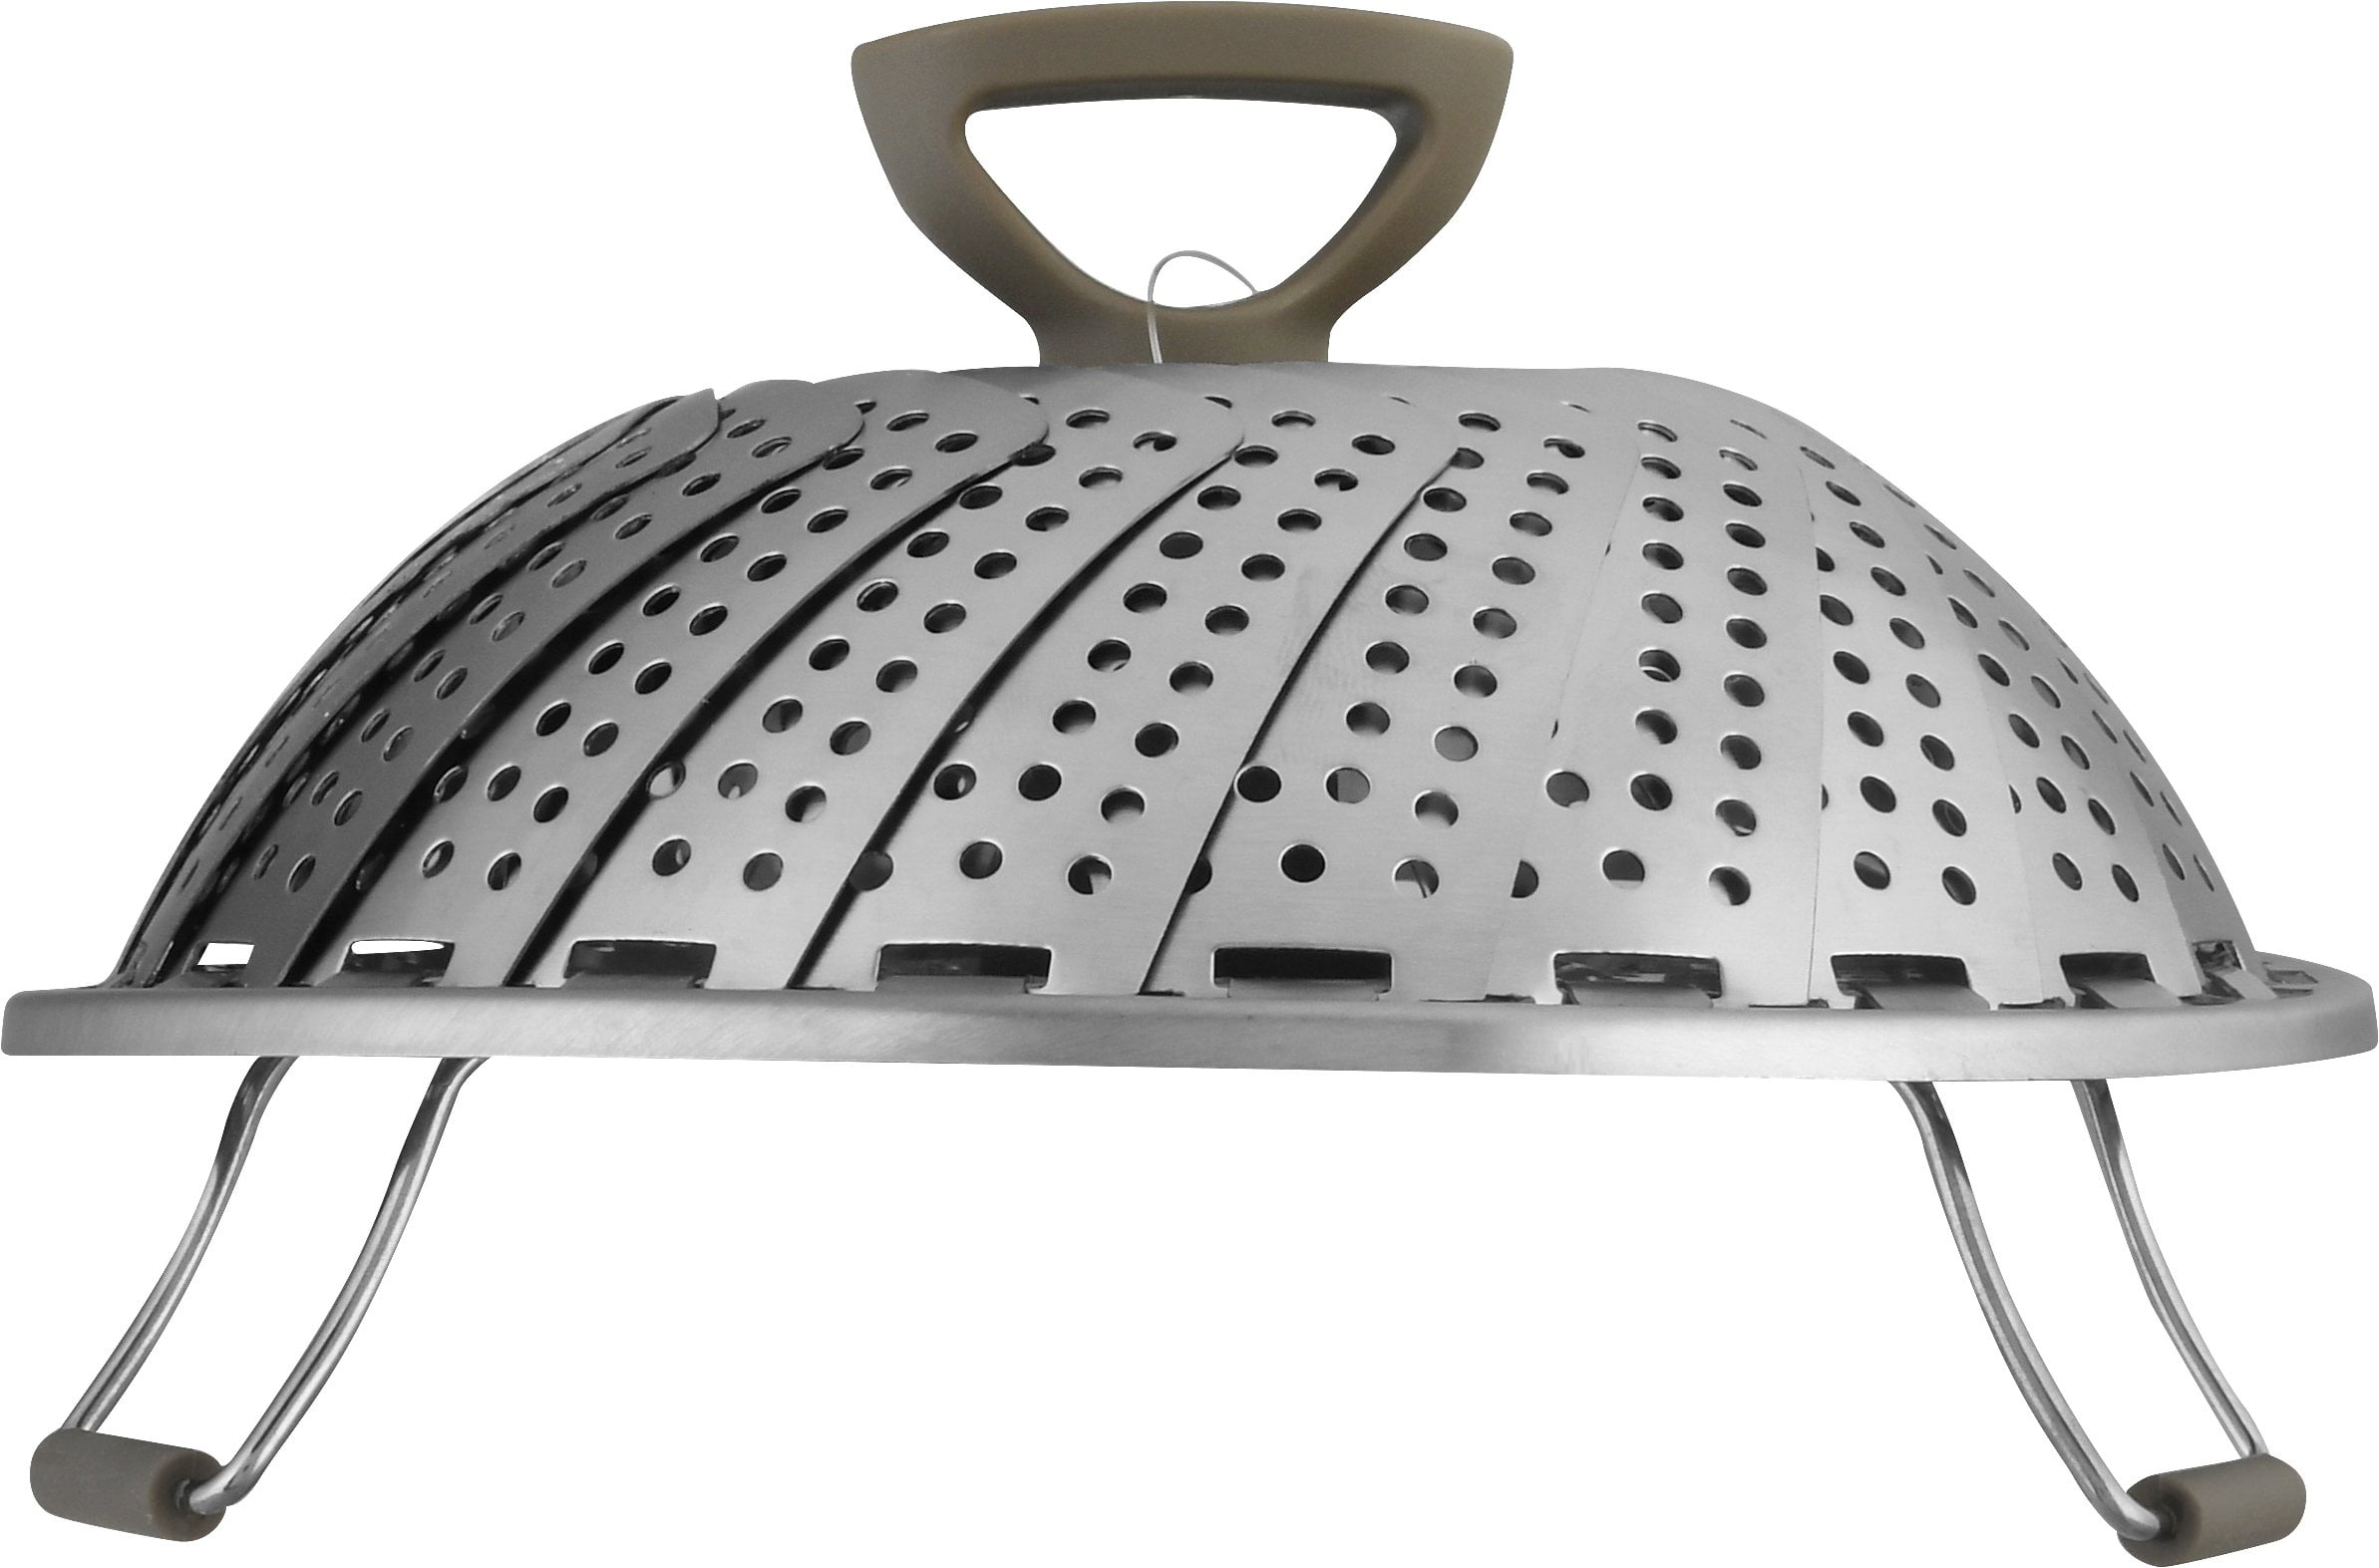 27cm Martha Stewart Stainless Steel Folding Steamer Basket – R & B Import